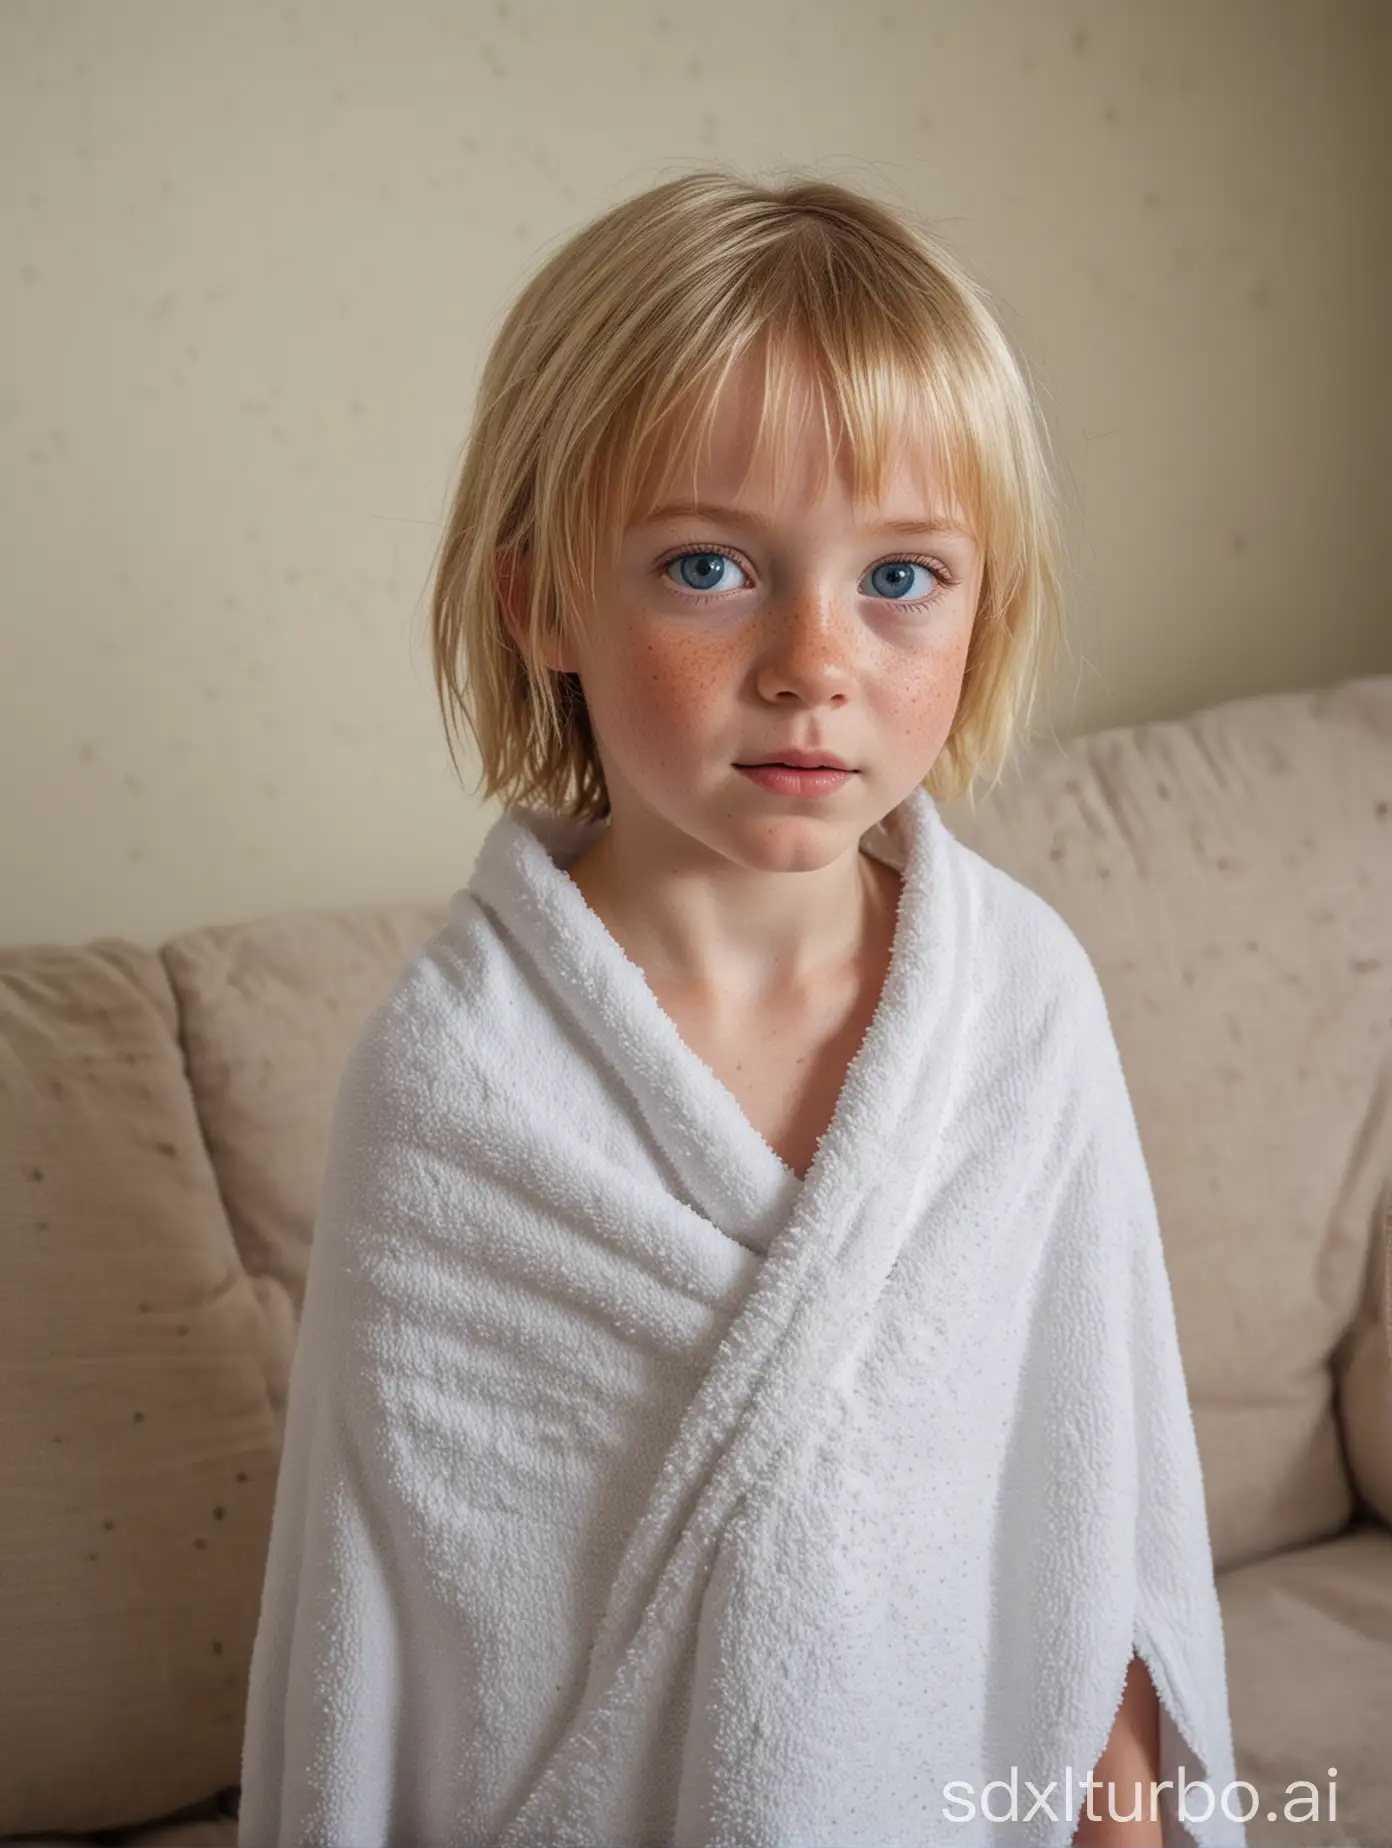 Adorable-Blonde-Girl-Standing-by-Corner-Sofa-in-Towel